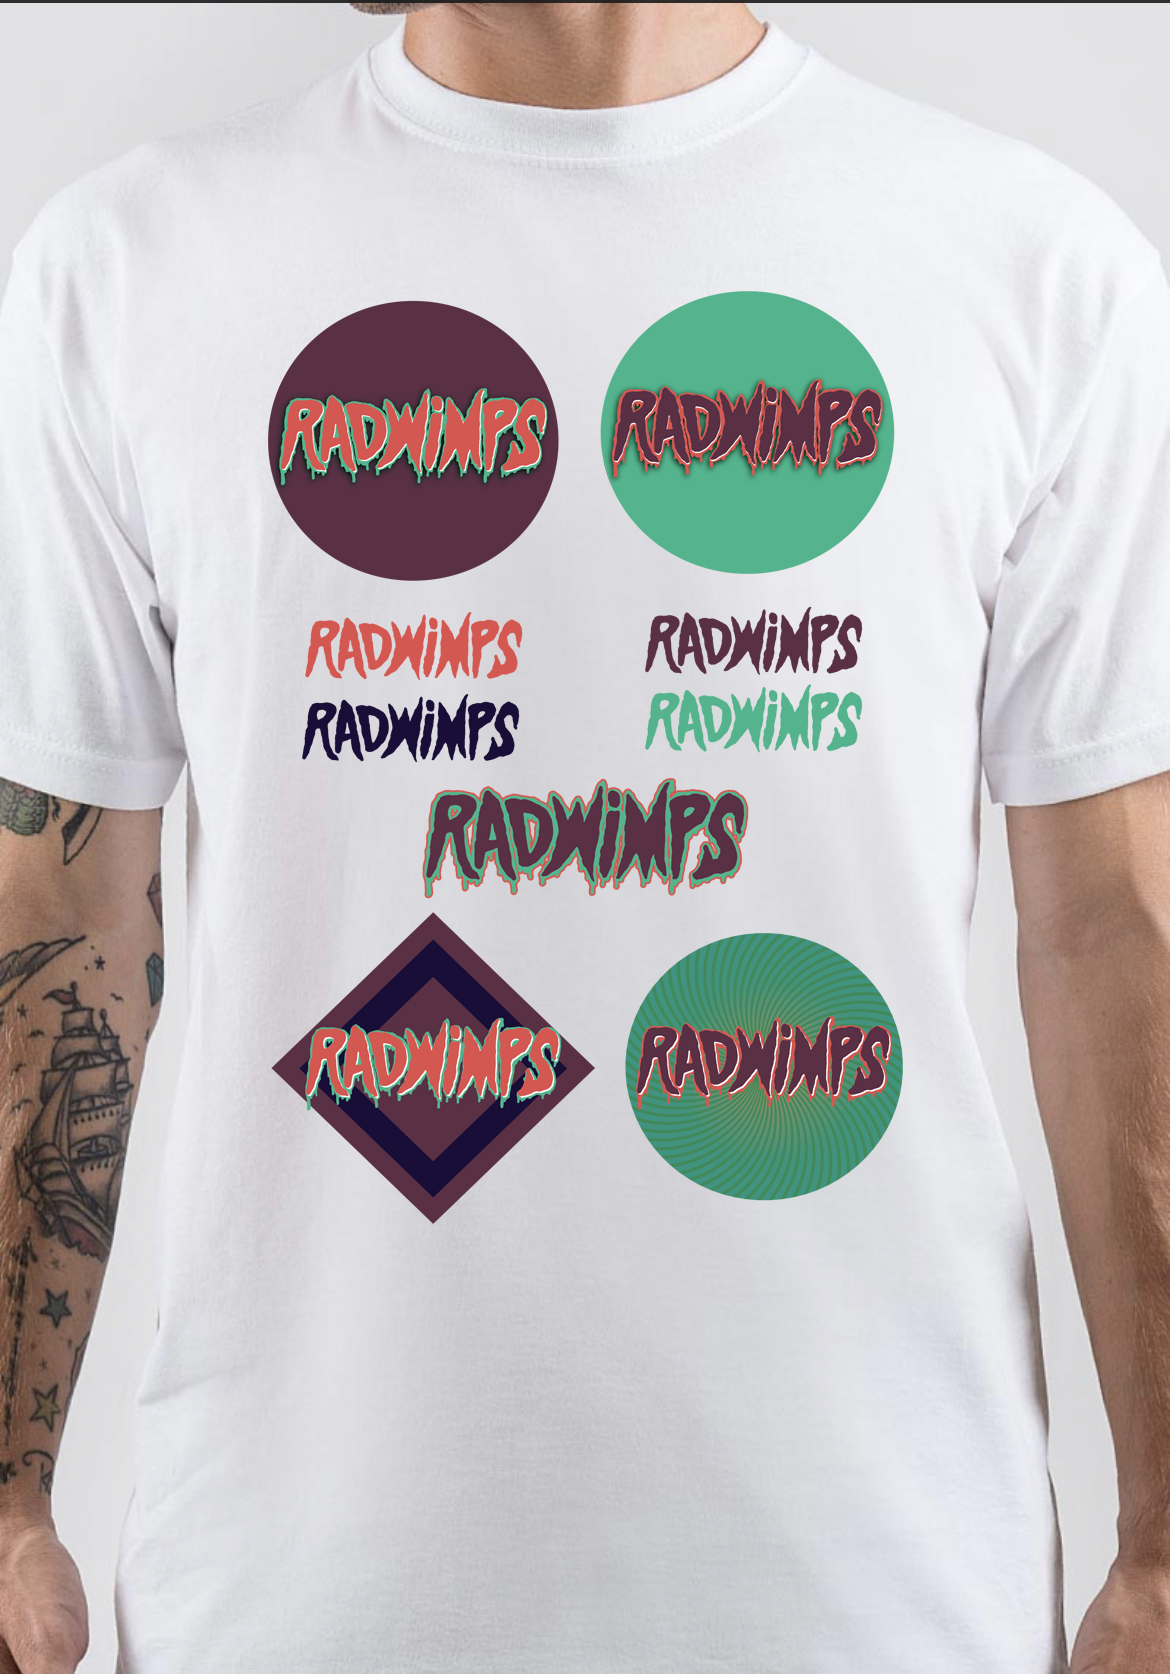 Radwimps T-Shirt And Merchandise